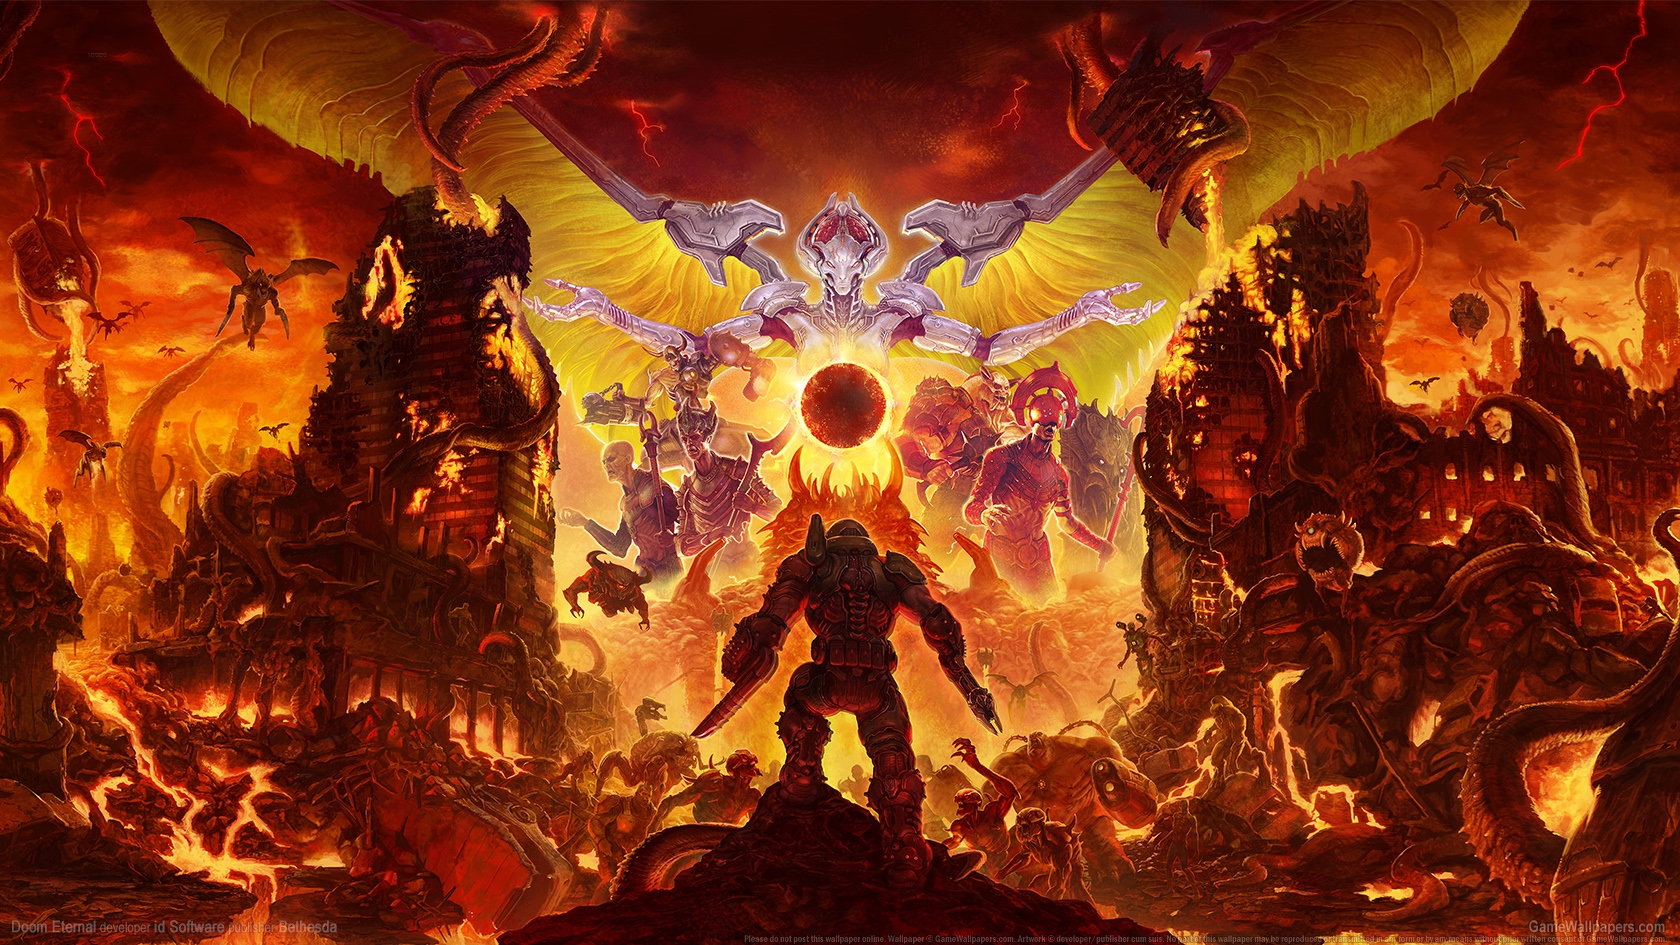 Doom Eternal 1680x945 wallpaper or background 08